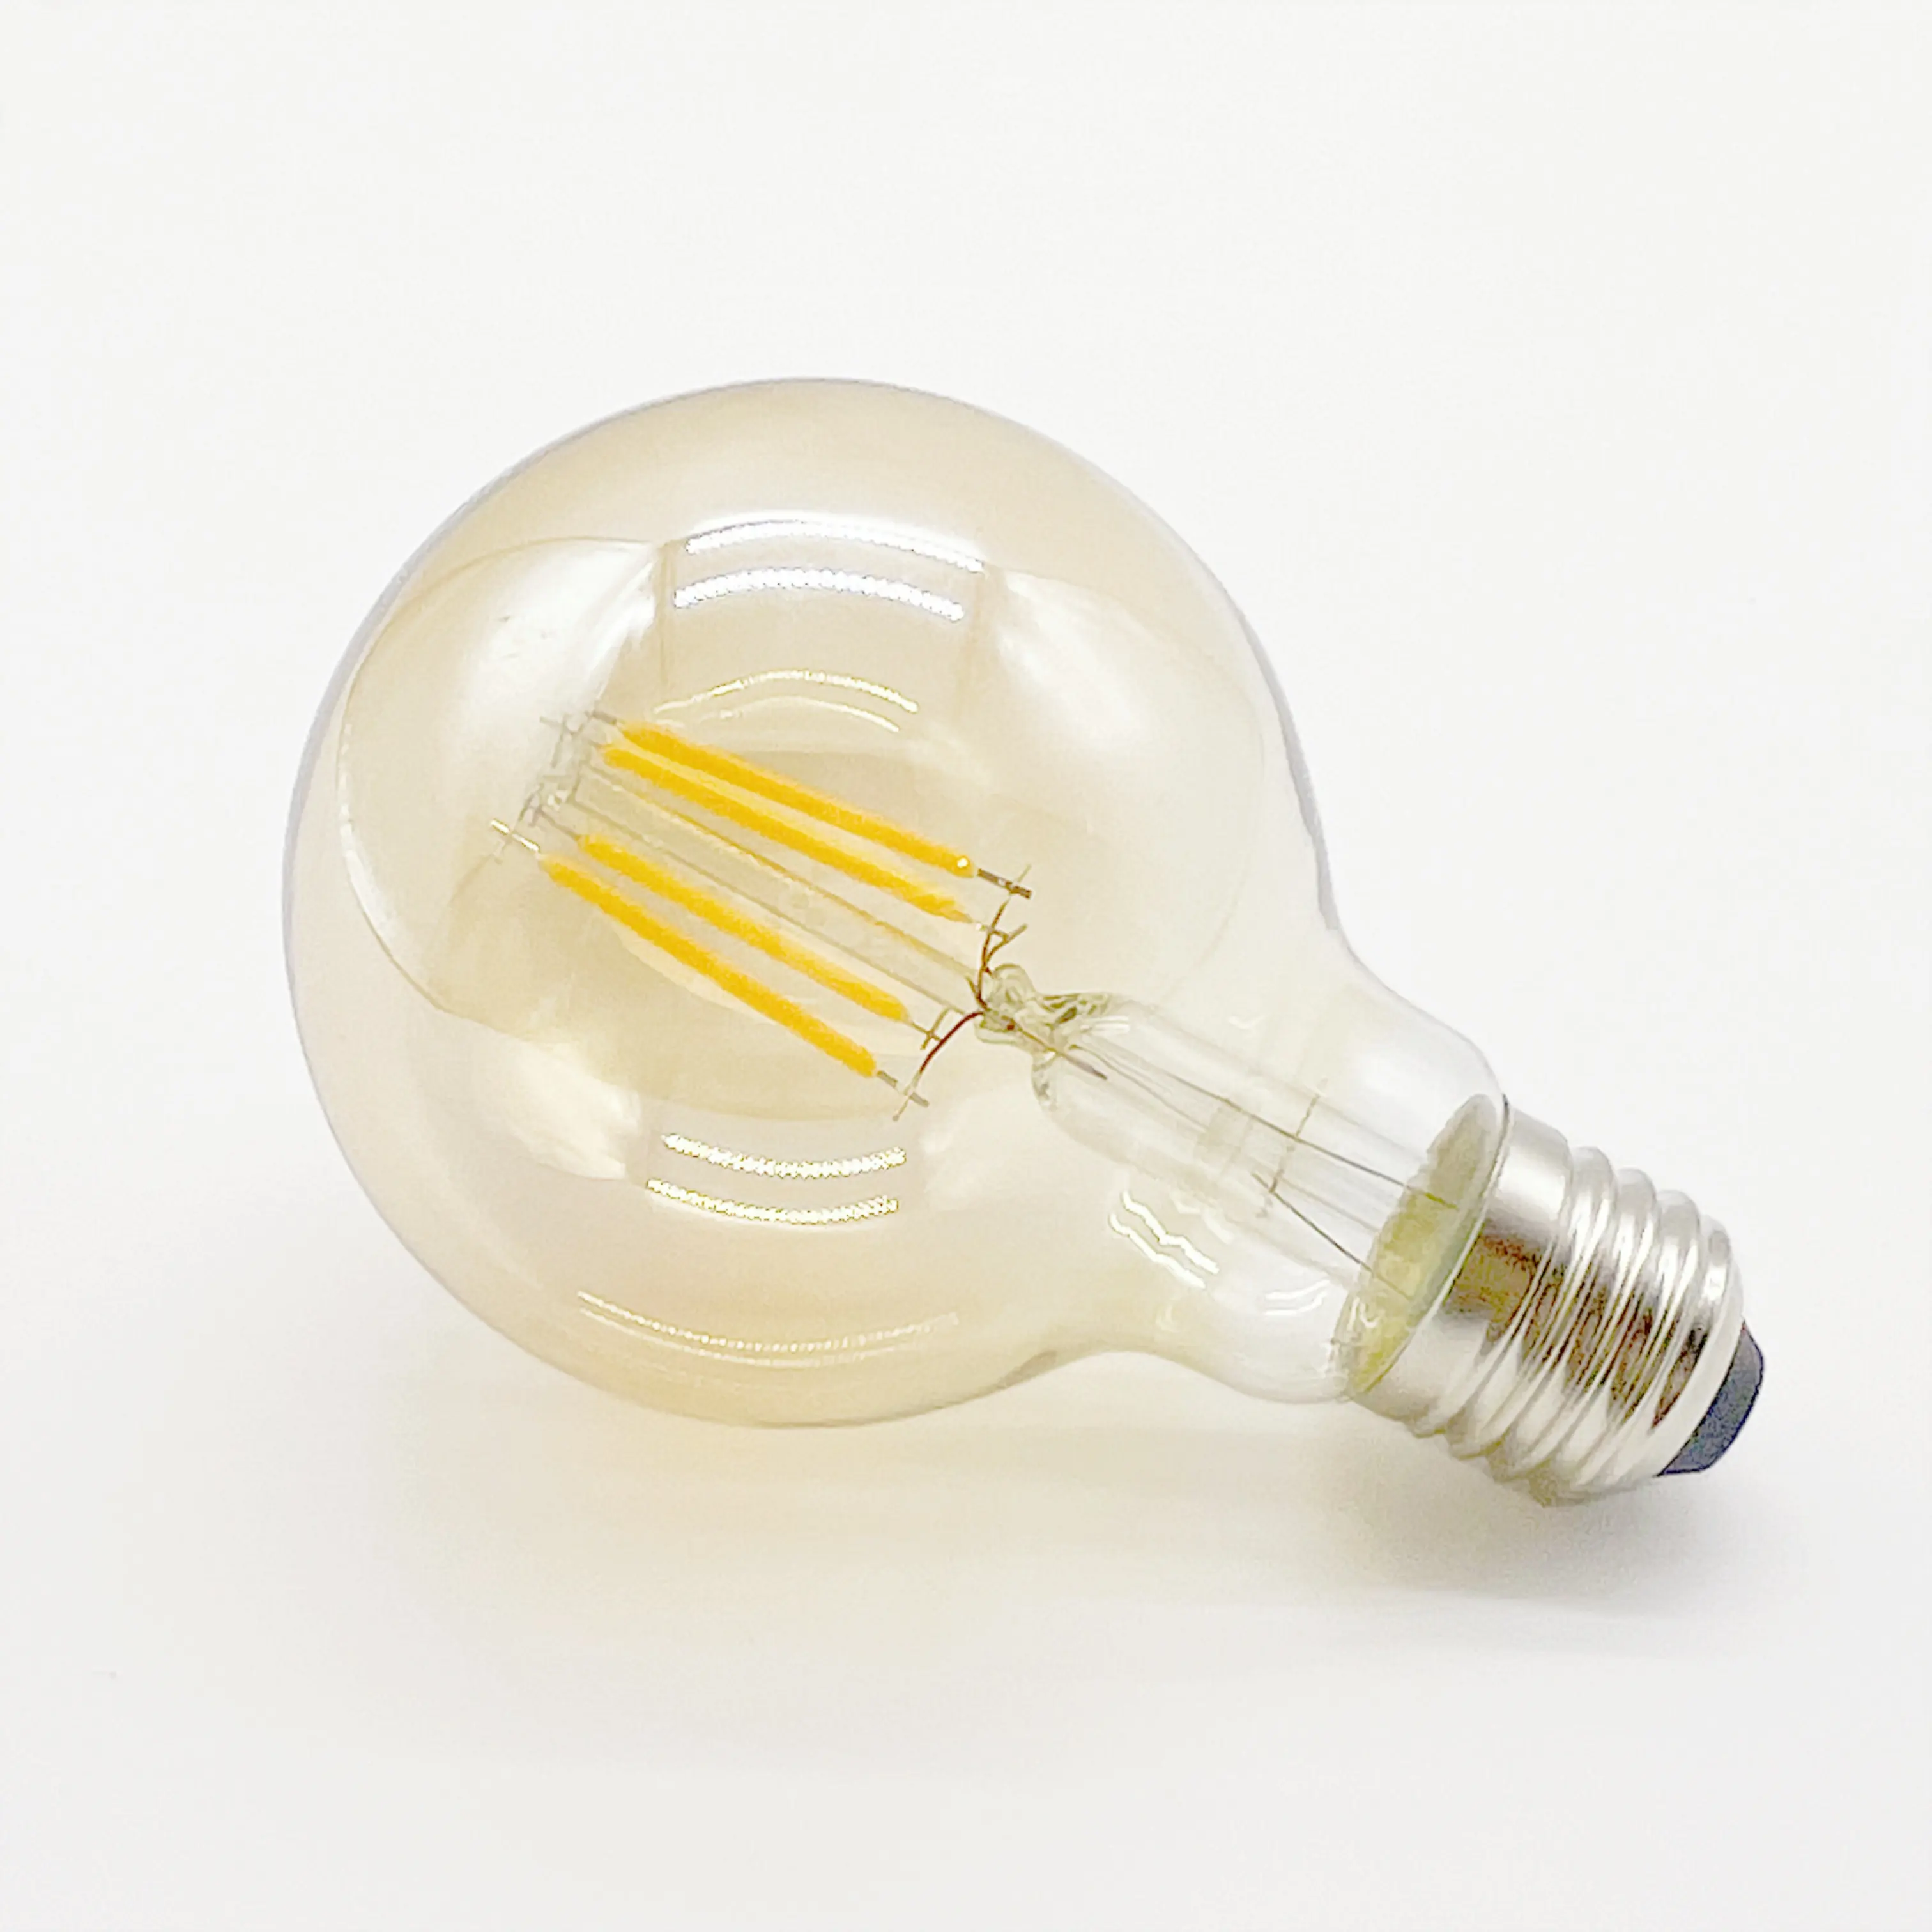 110V 220V Huishoudelijke Decoratie Lamp G80 Glazen Schaal Led Energiebesparing E26 E27 Schroefdraad Lampvoet 4W 8W 12W